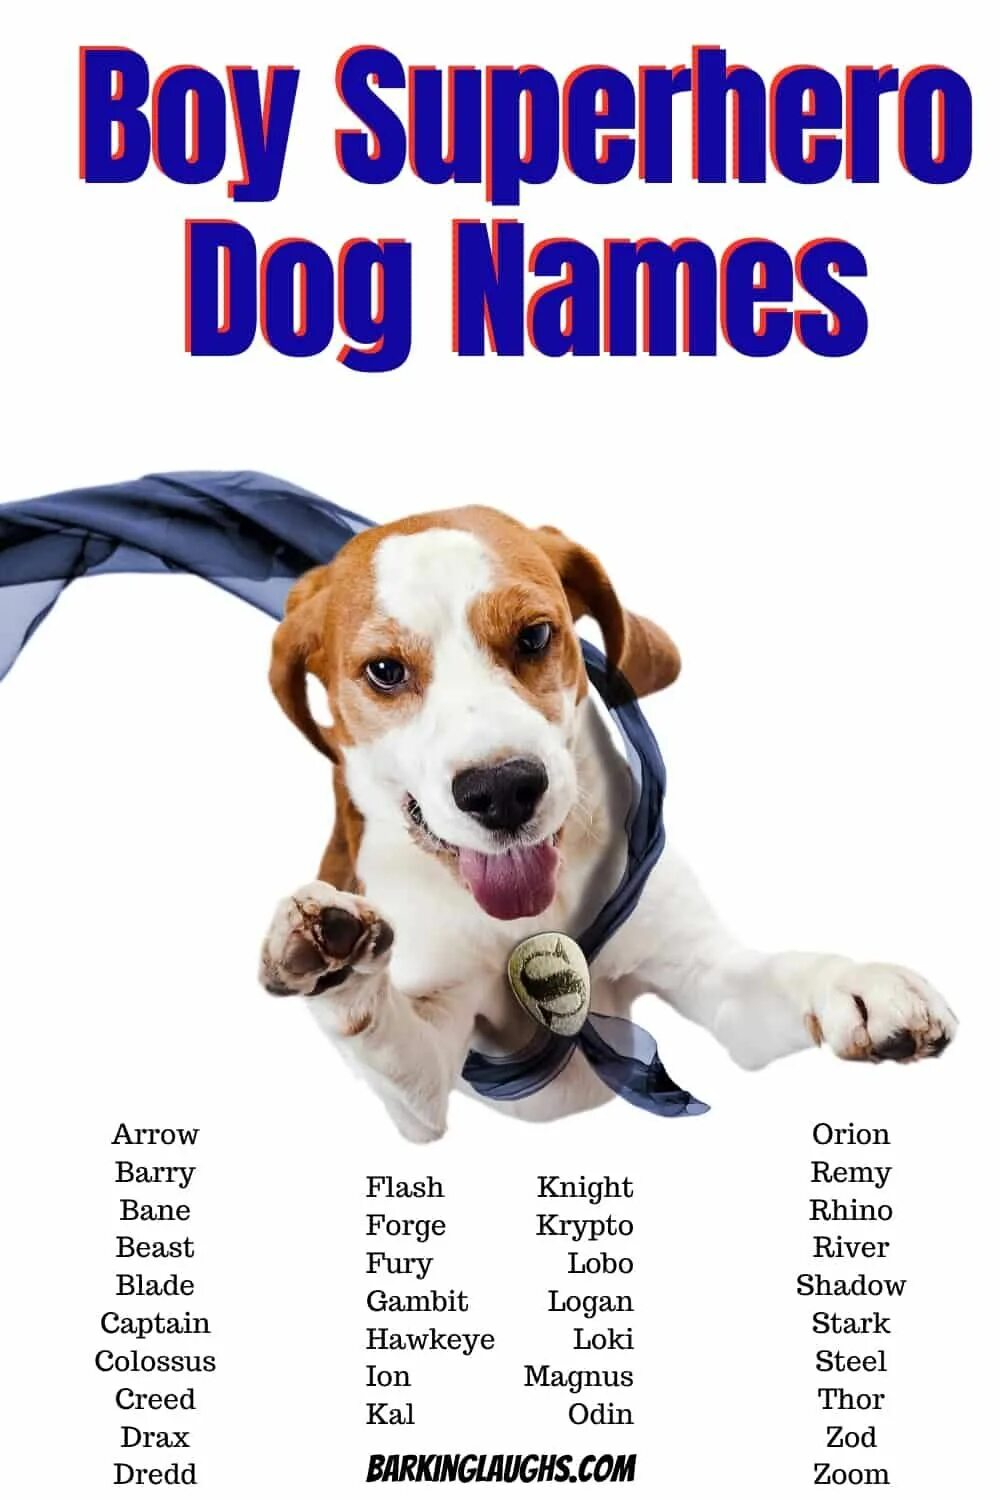 Dogs s names are. Имена для собак. Имена для собак мальчиков. Собачьи имена для мальчиков. Кличка для щенка.